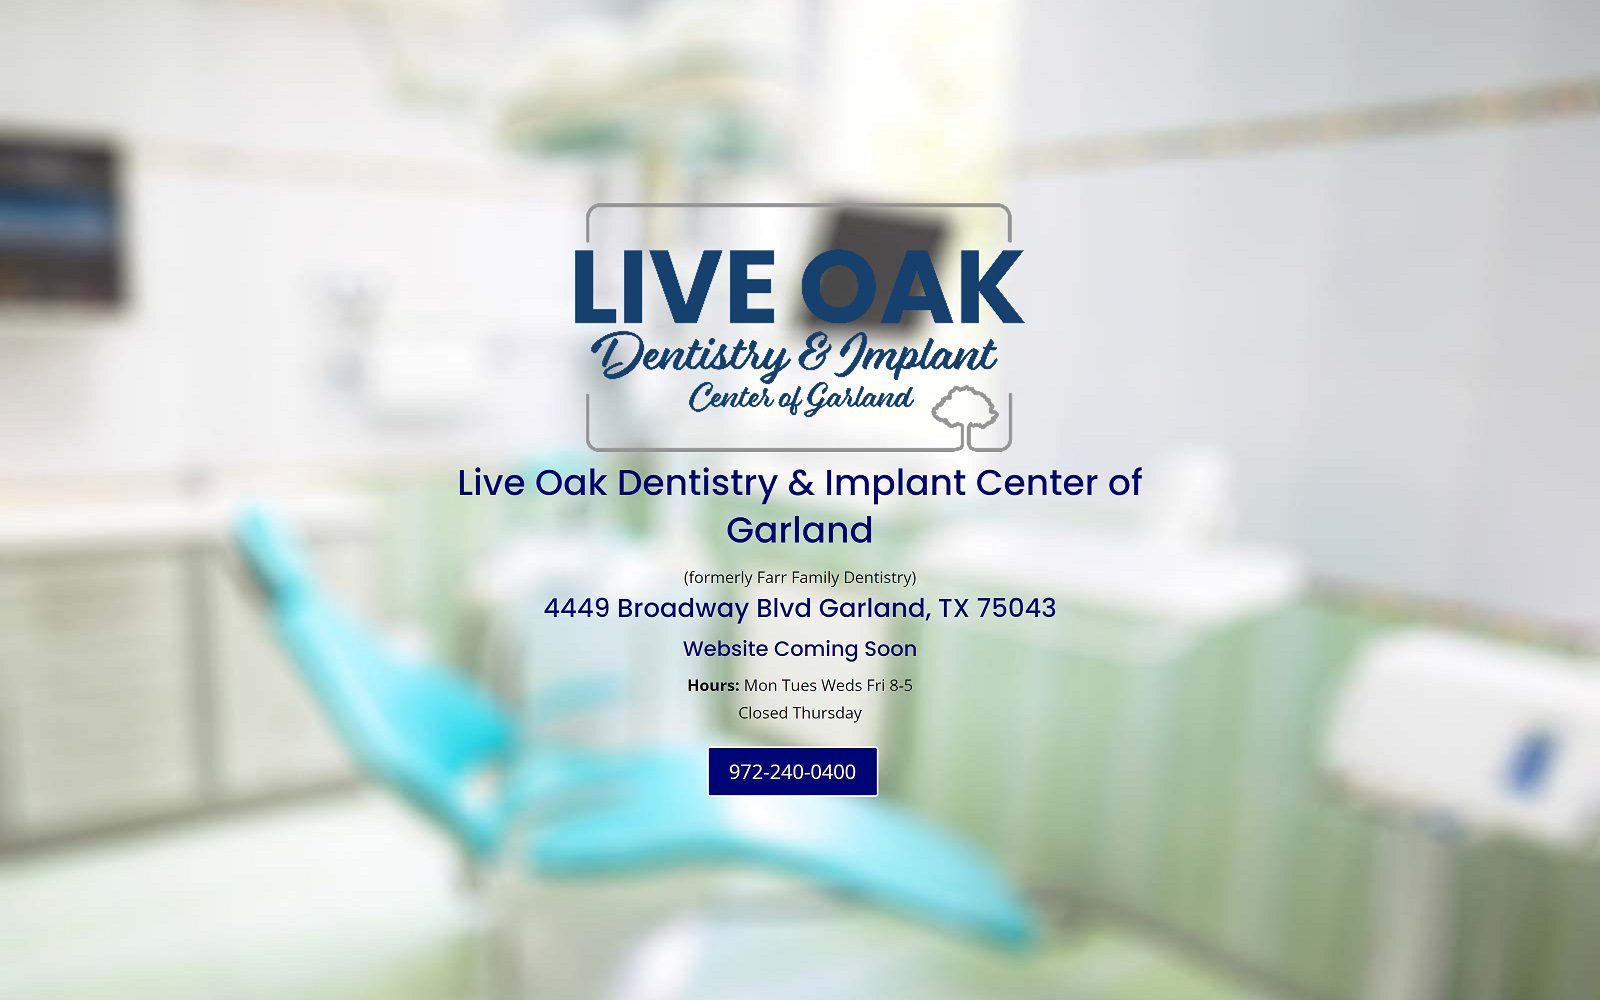 The screenshot of live oak dentistry & implant center of garland website